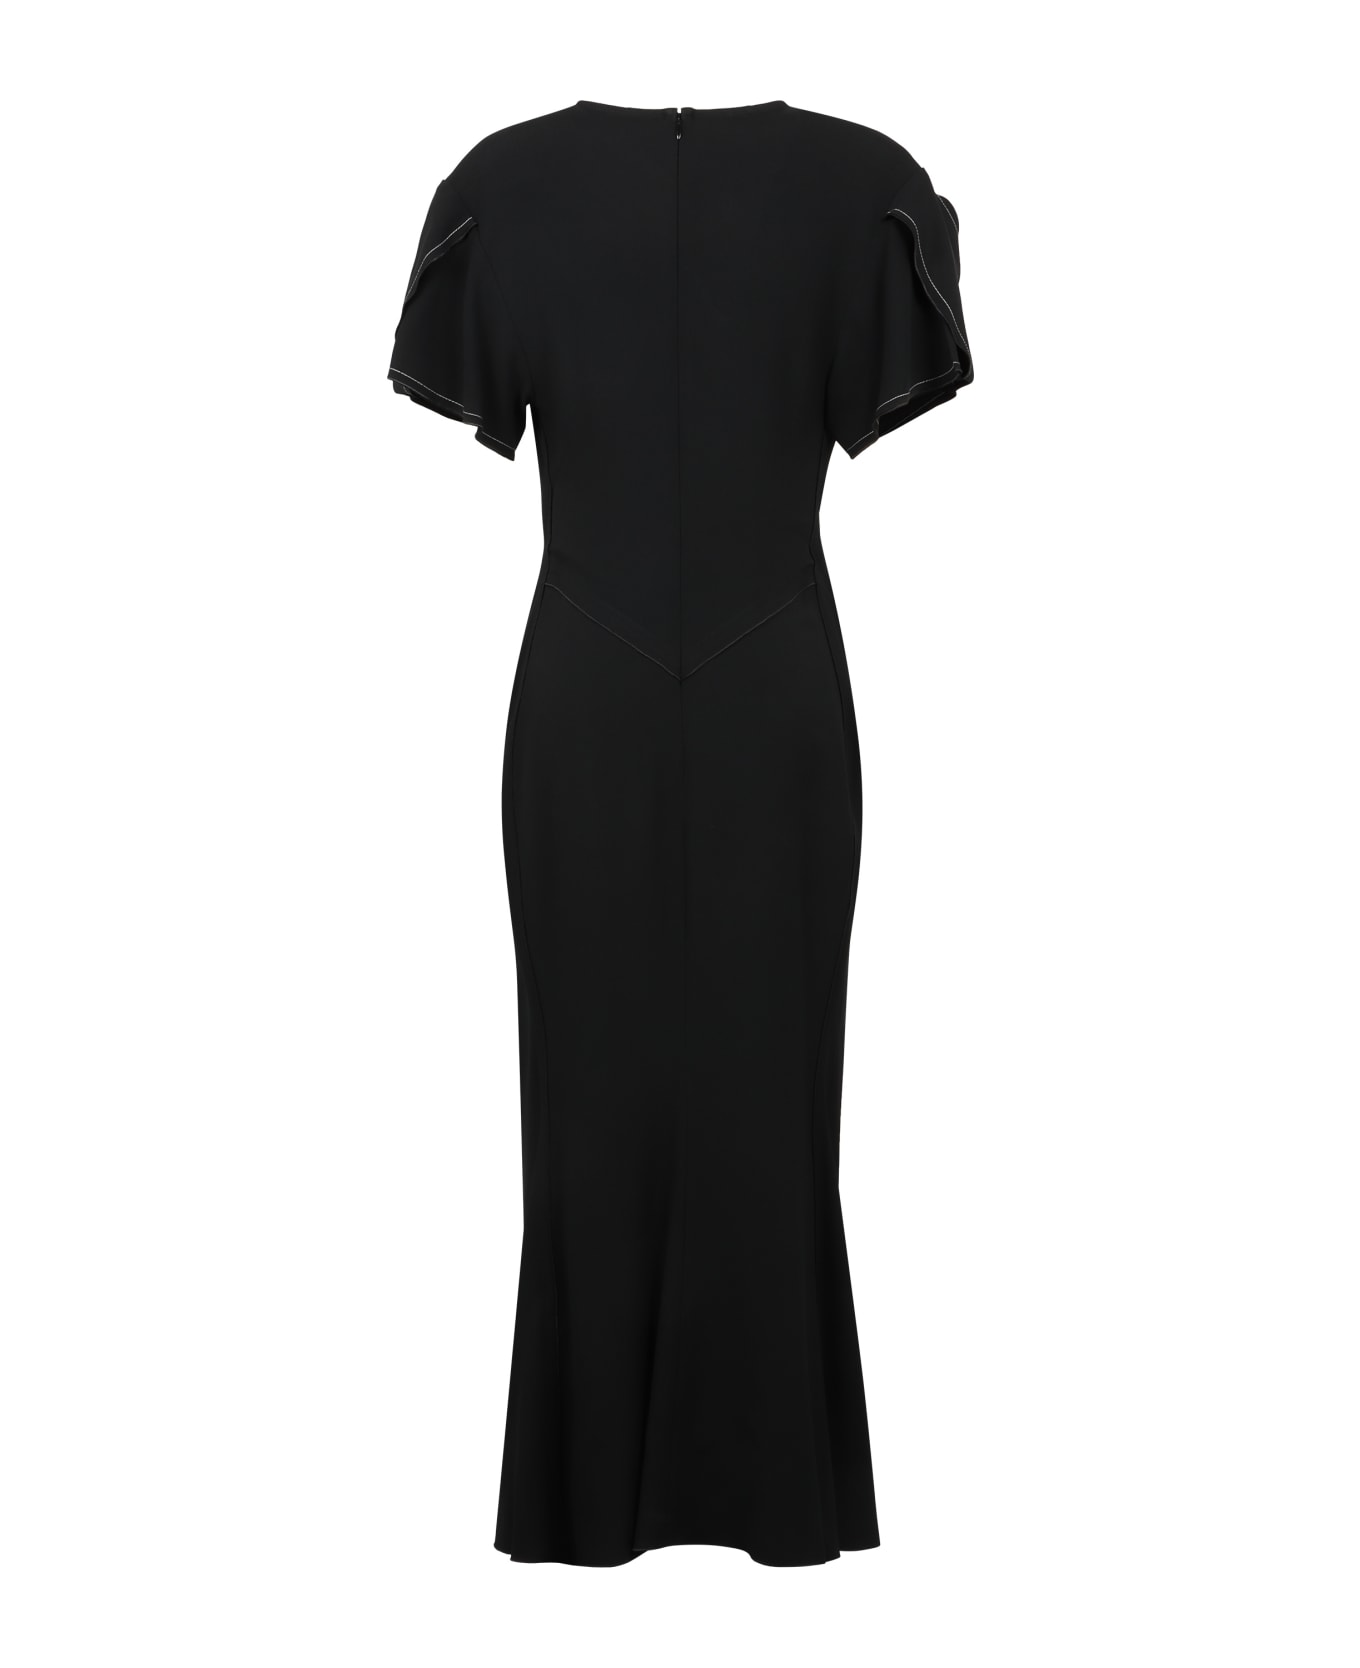 Victoria Beckham Stretch Viscose Dress - black